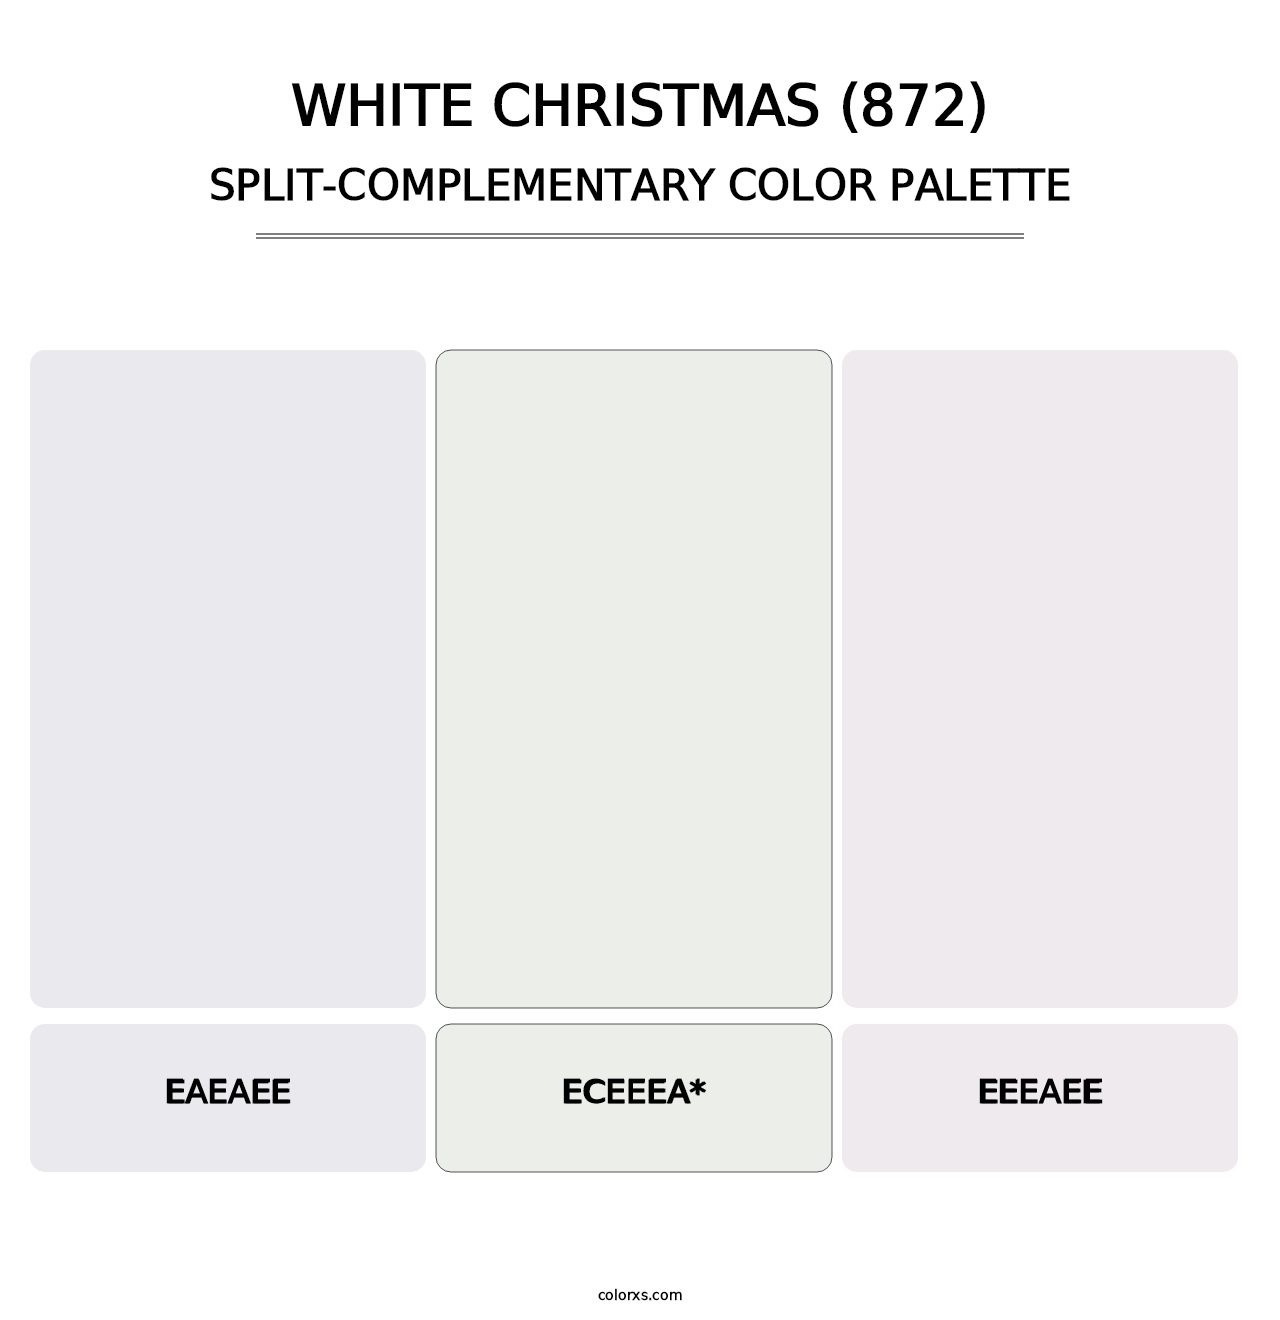 White Christmas (872) - Split-Complementary Color Palette